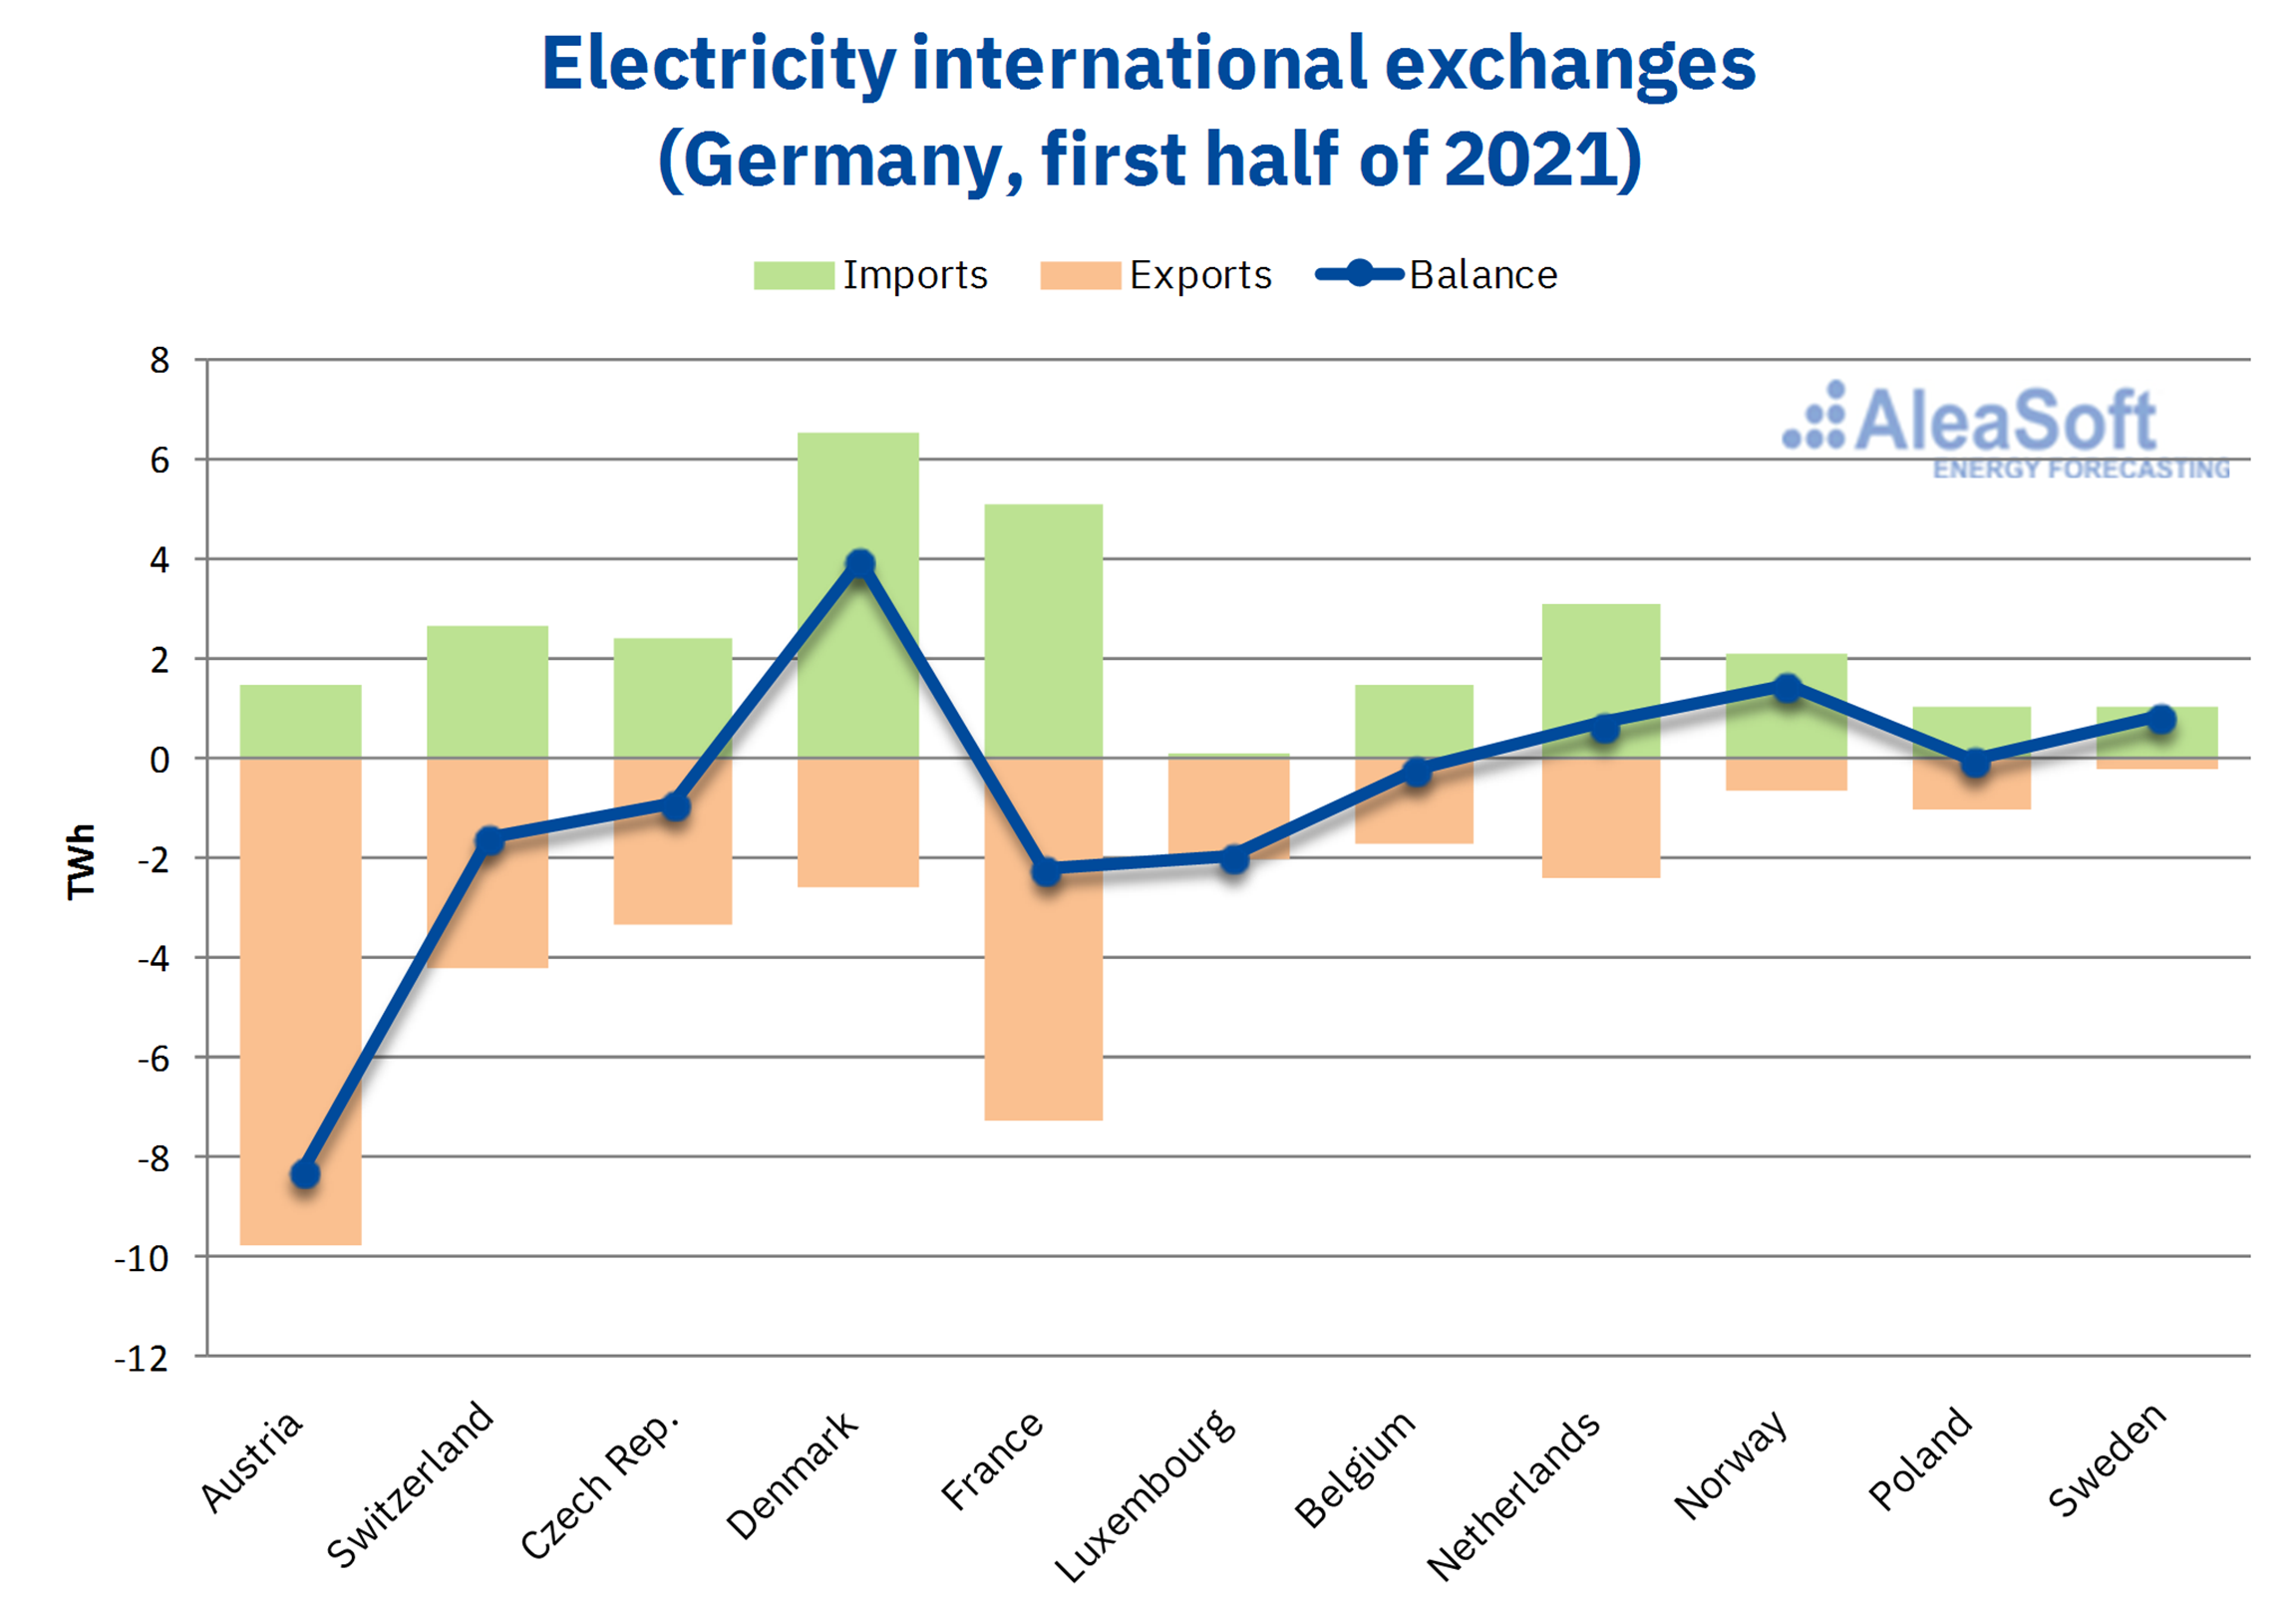 AleaSoft - germany electricity international exchanges